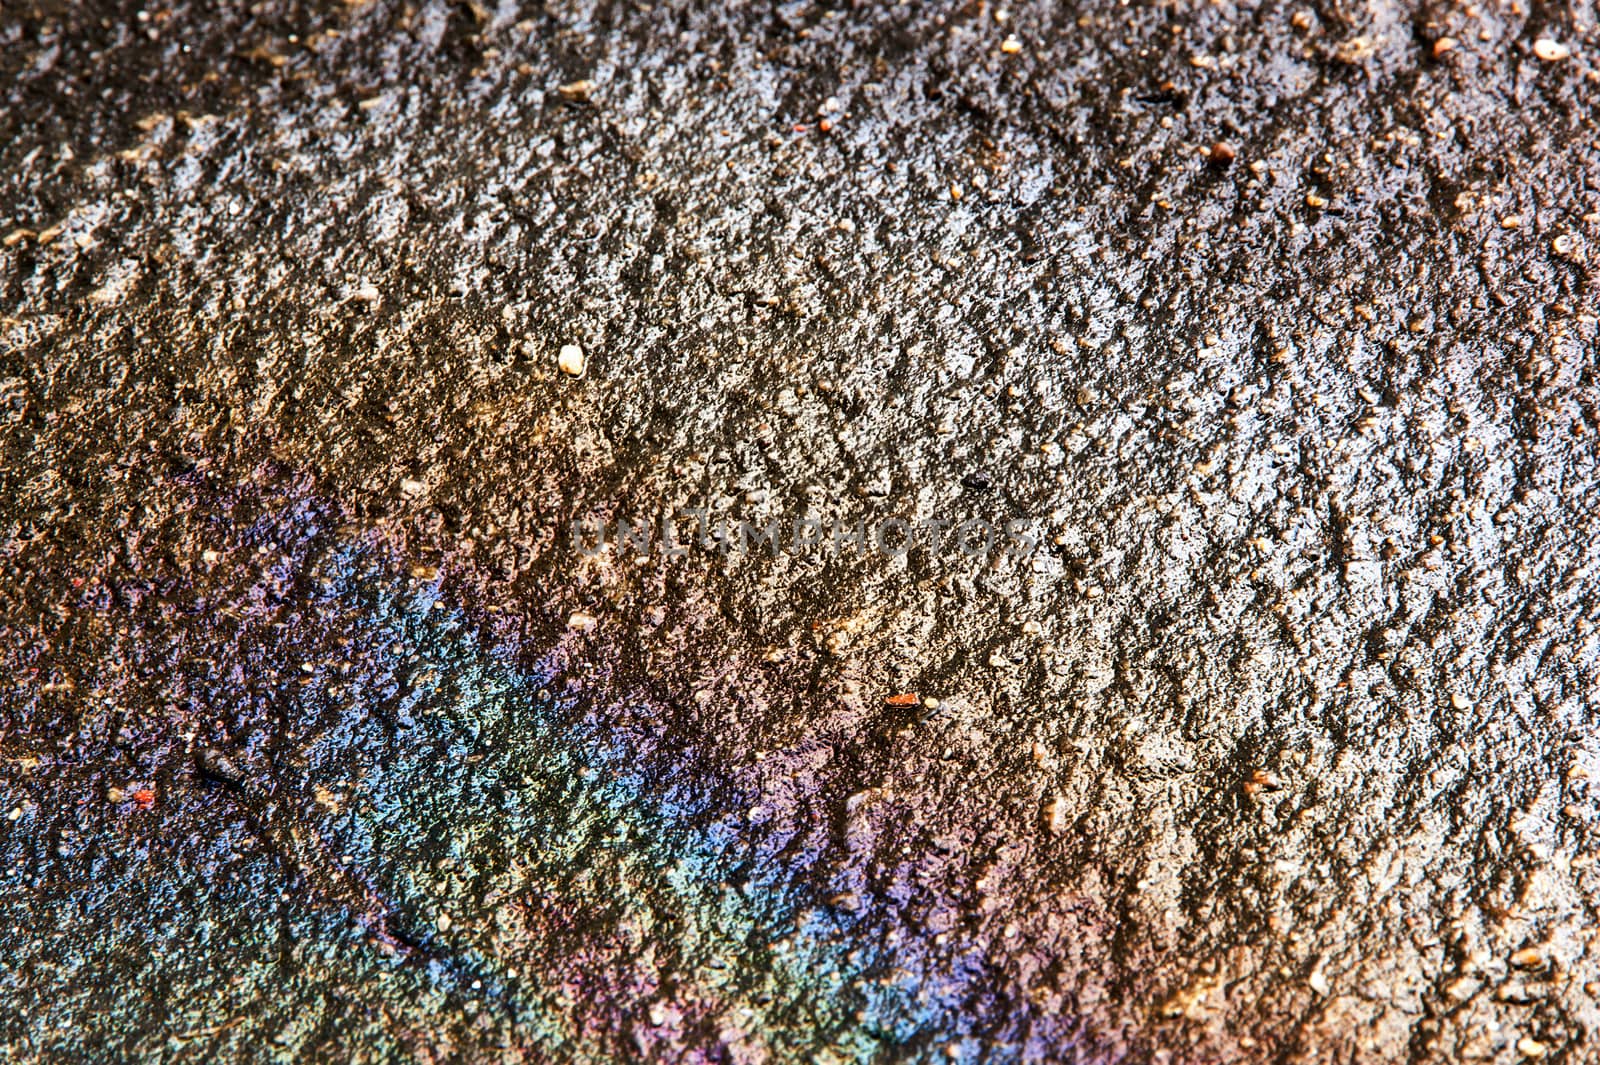 Oil on ground when wet cause rainbow on water on ground concrete